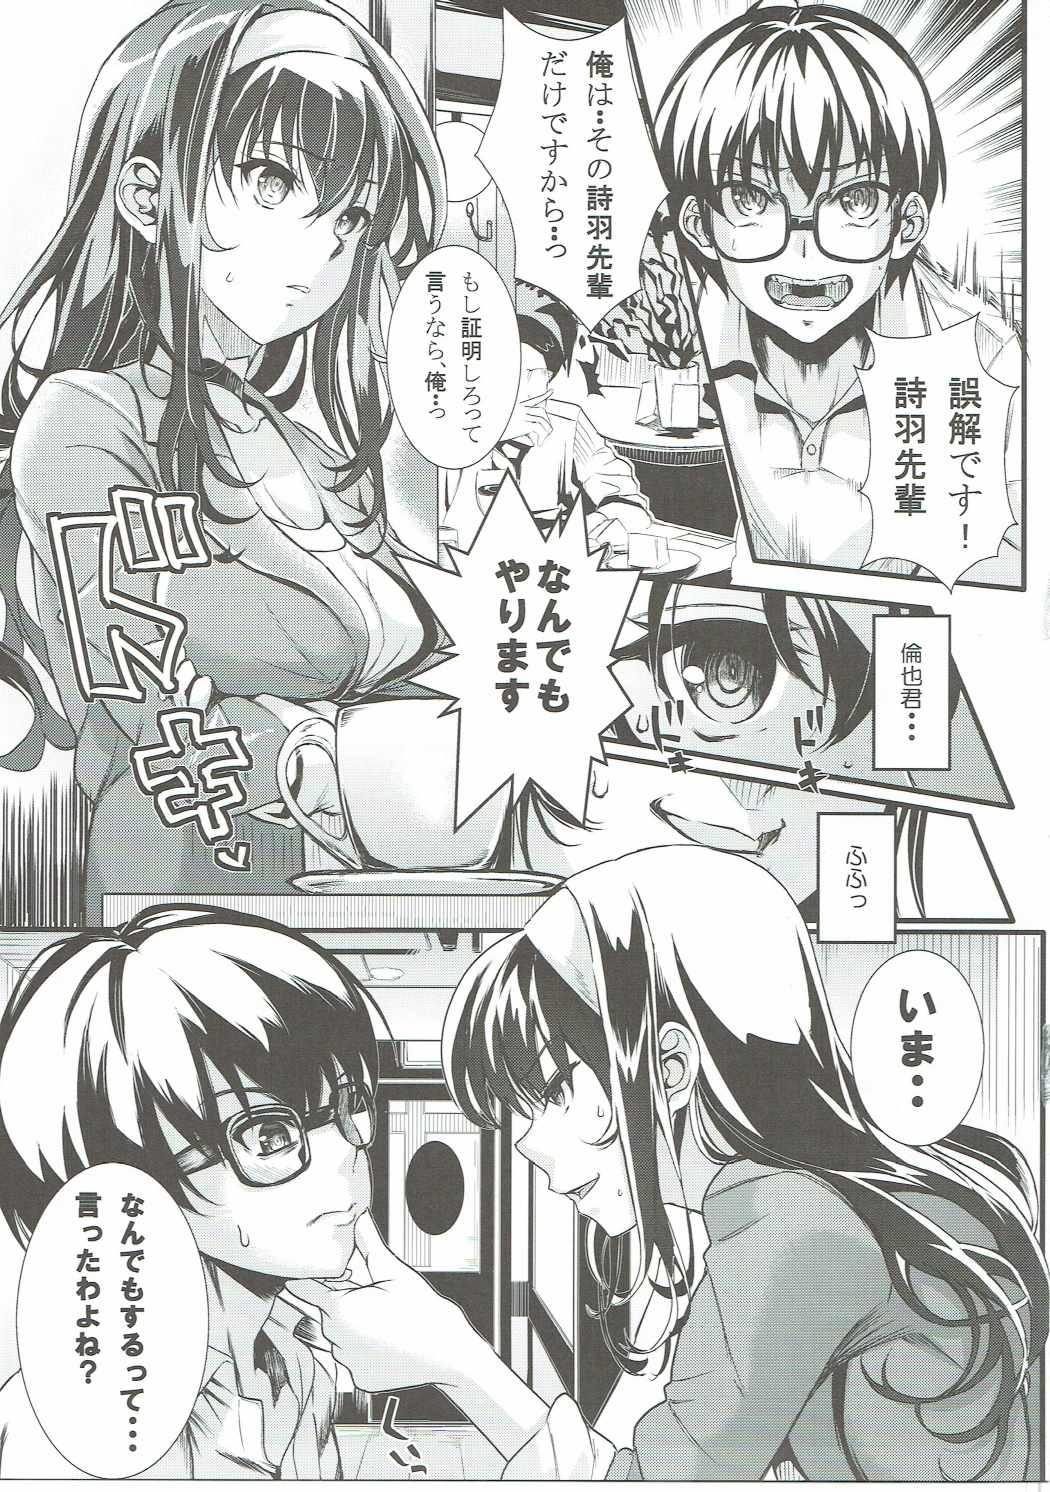 Follando Saenai Futari no Itashikata 4 - Saenai heroine no sodatekata Small Boobs - Page 4